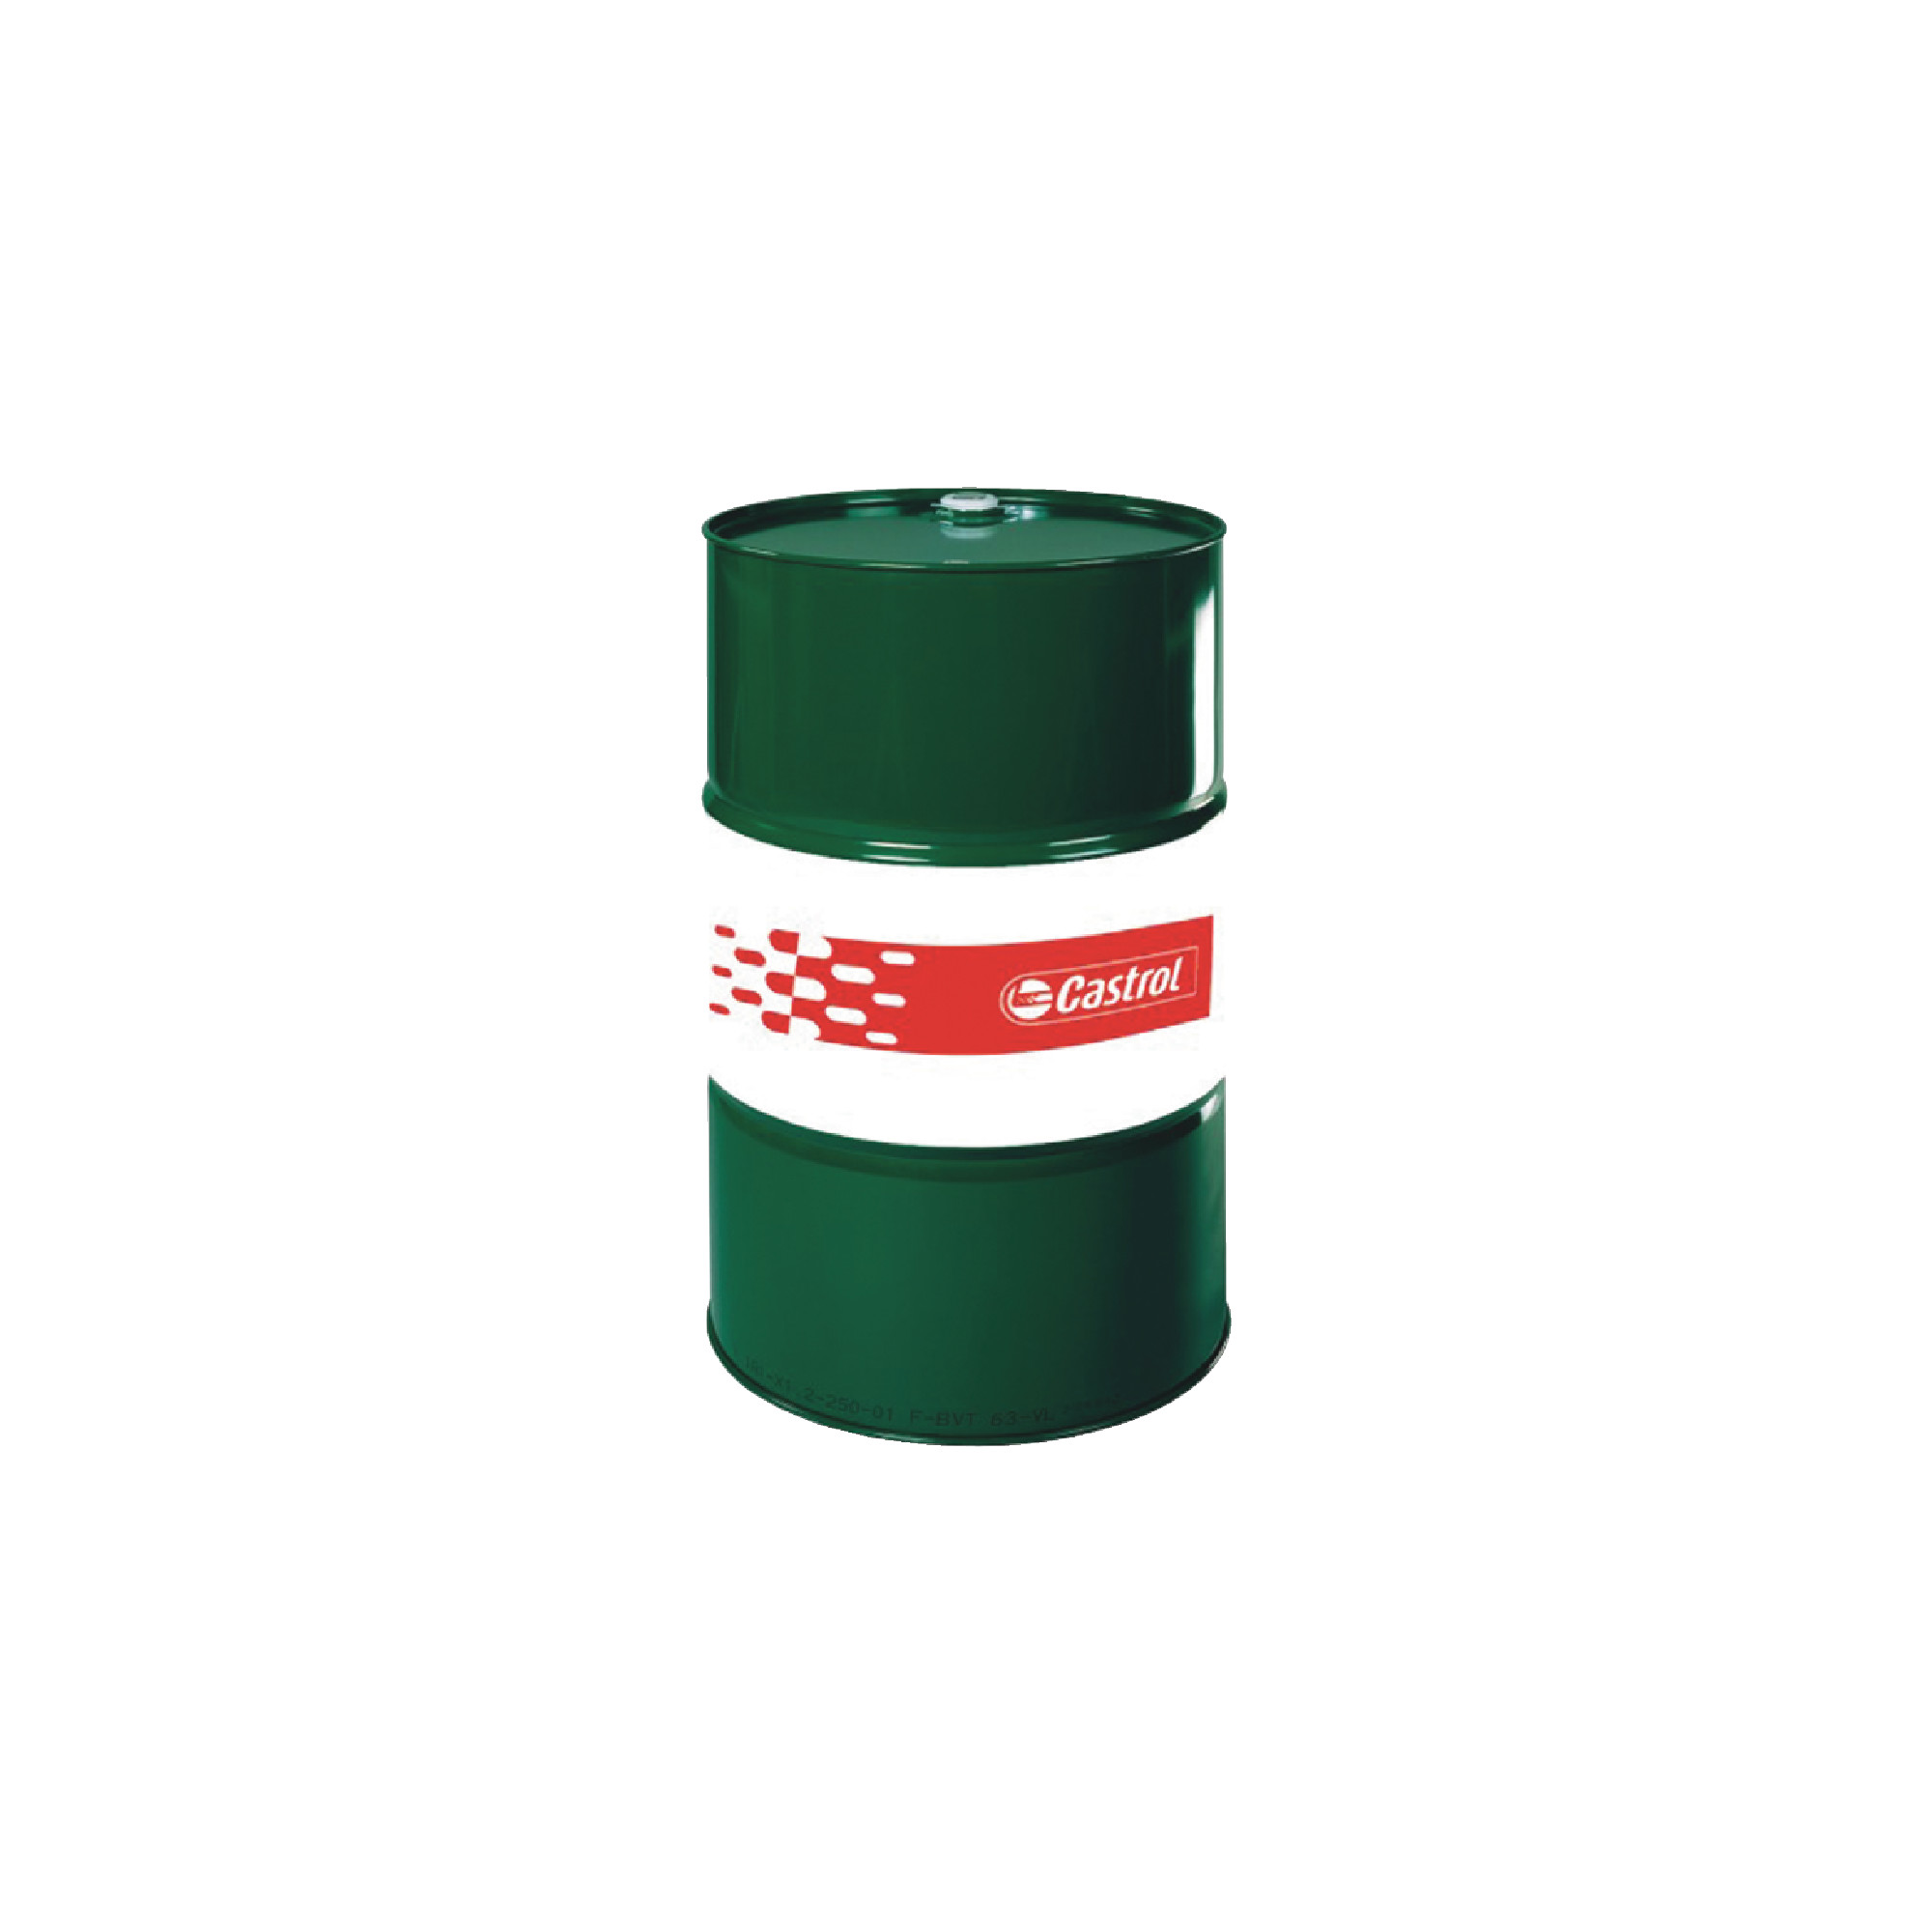 CASTROL HYSOL 6754 55 Gallon Drum Heavy-Duty Water Soluble Oil